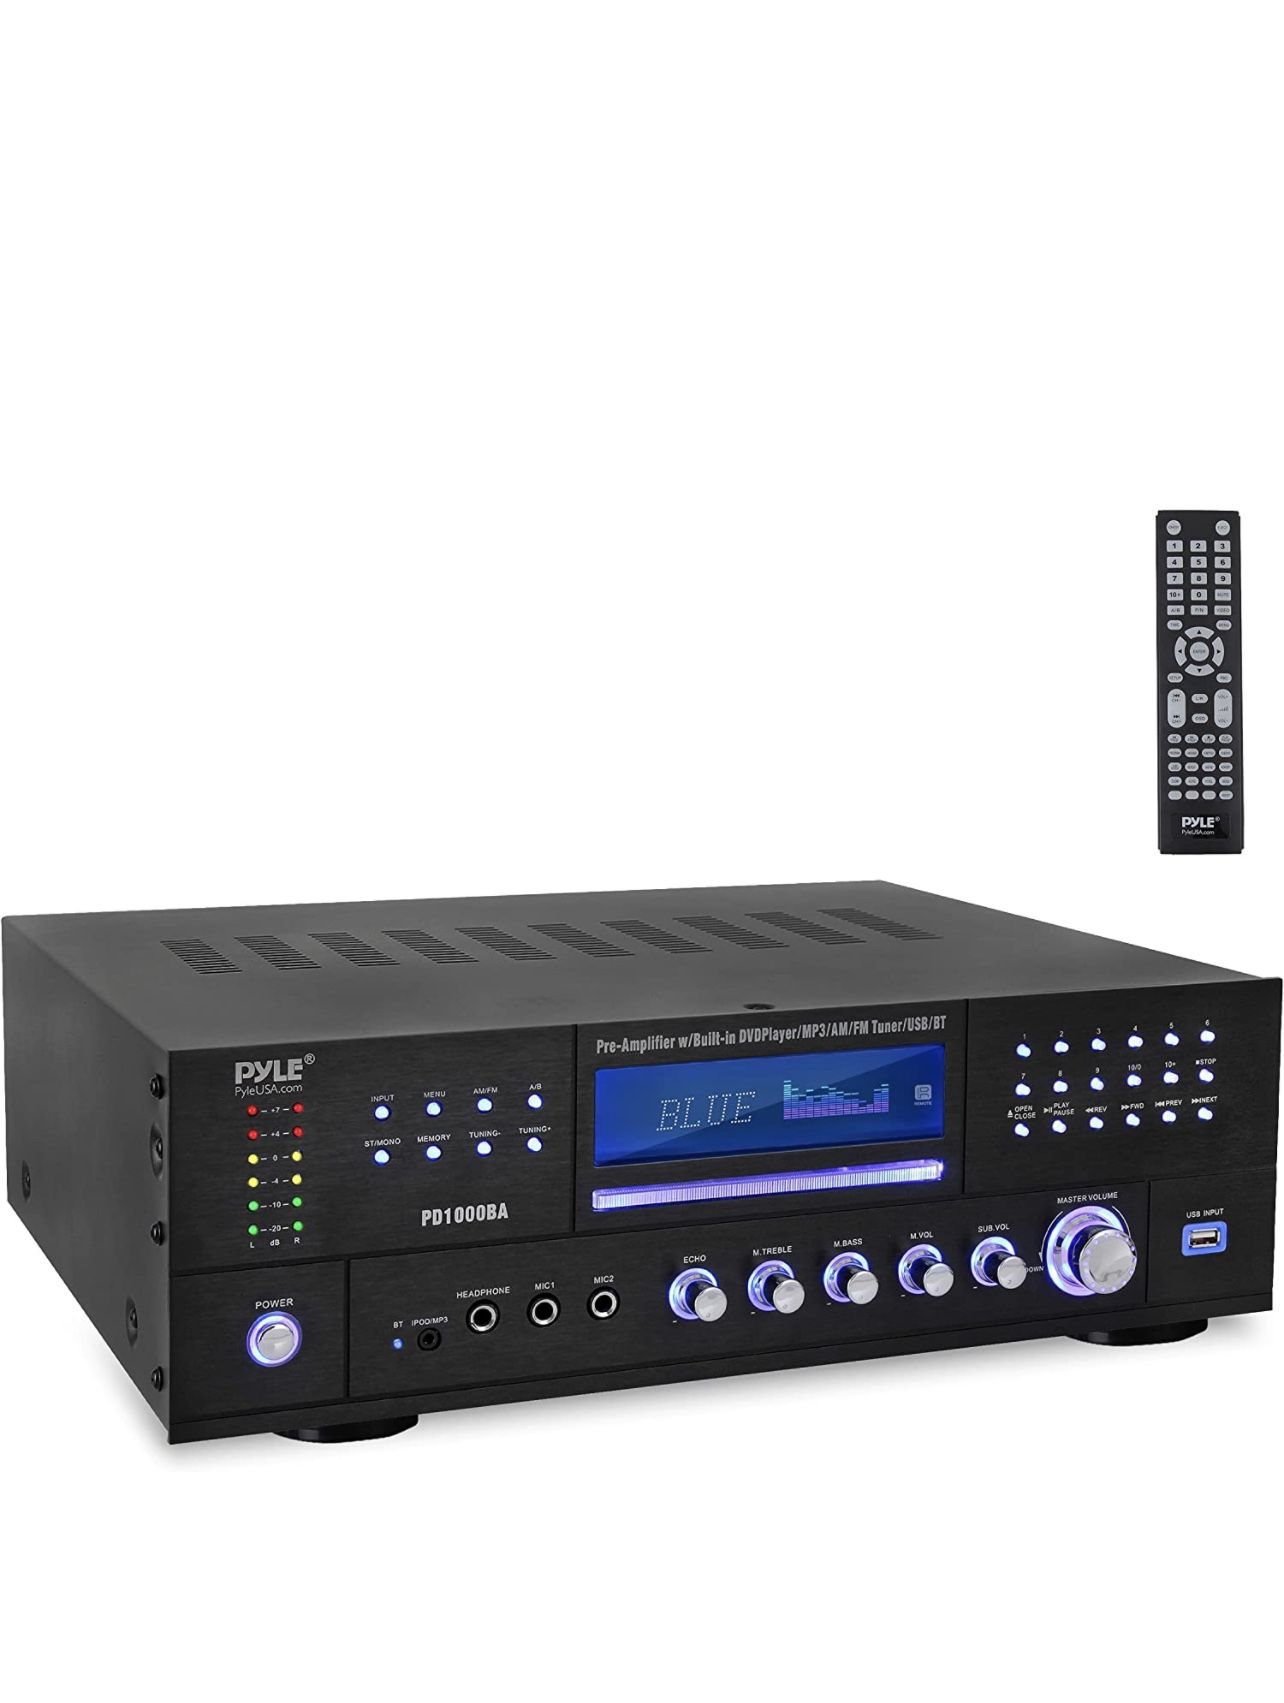 -Channel Wireless Bluetooth Power Amplifier - 1000W Stereo Speaker Home Audio Receiver w/FM Radio, USB, Headphone, 2 Mic w/Echo, CD DVD #p1006